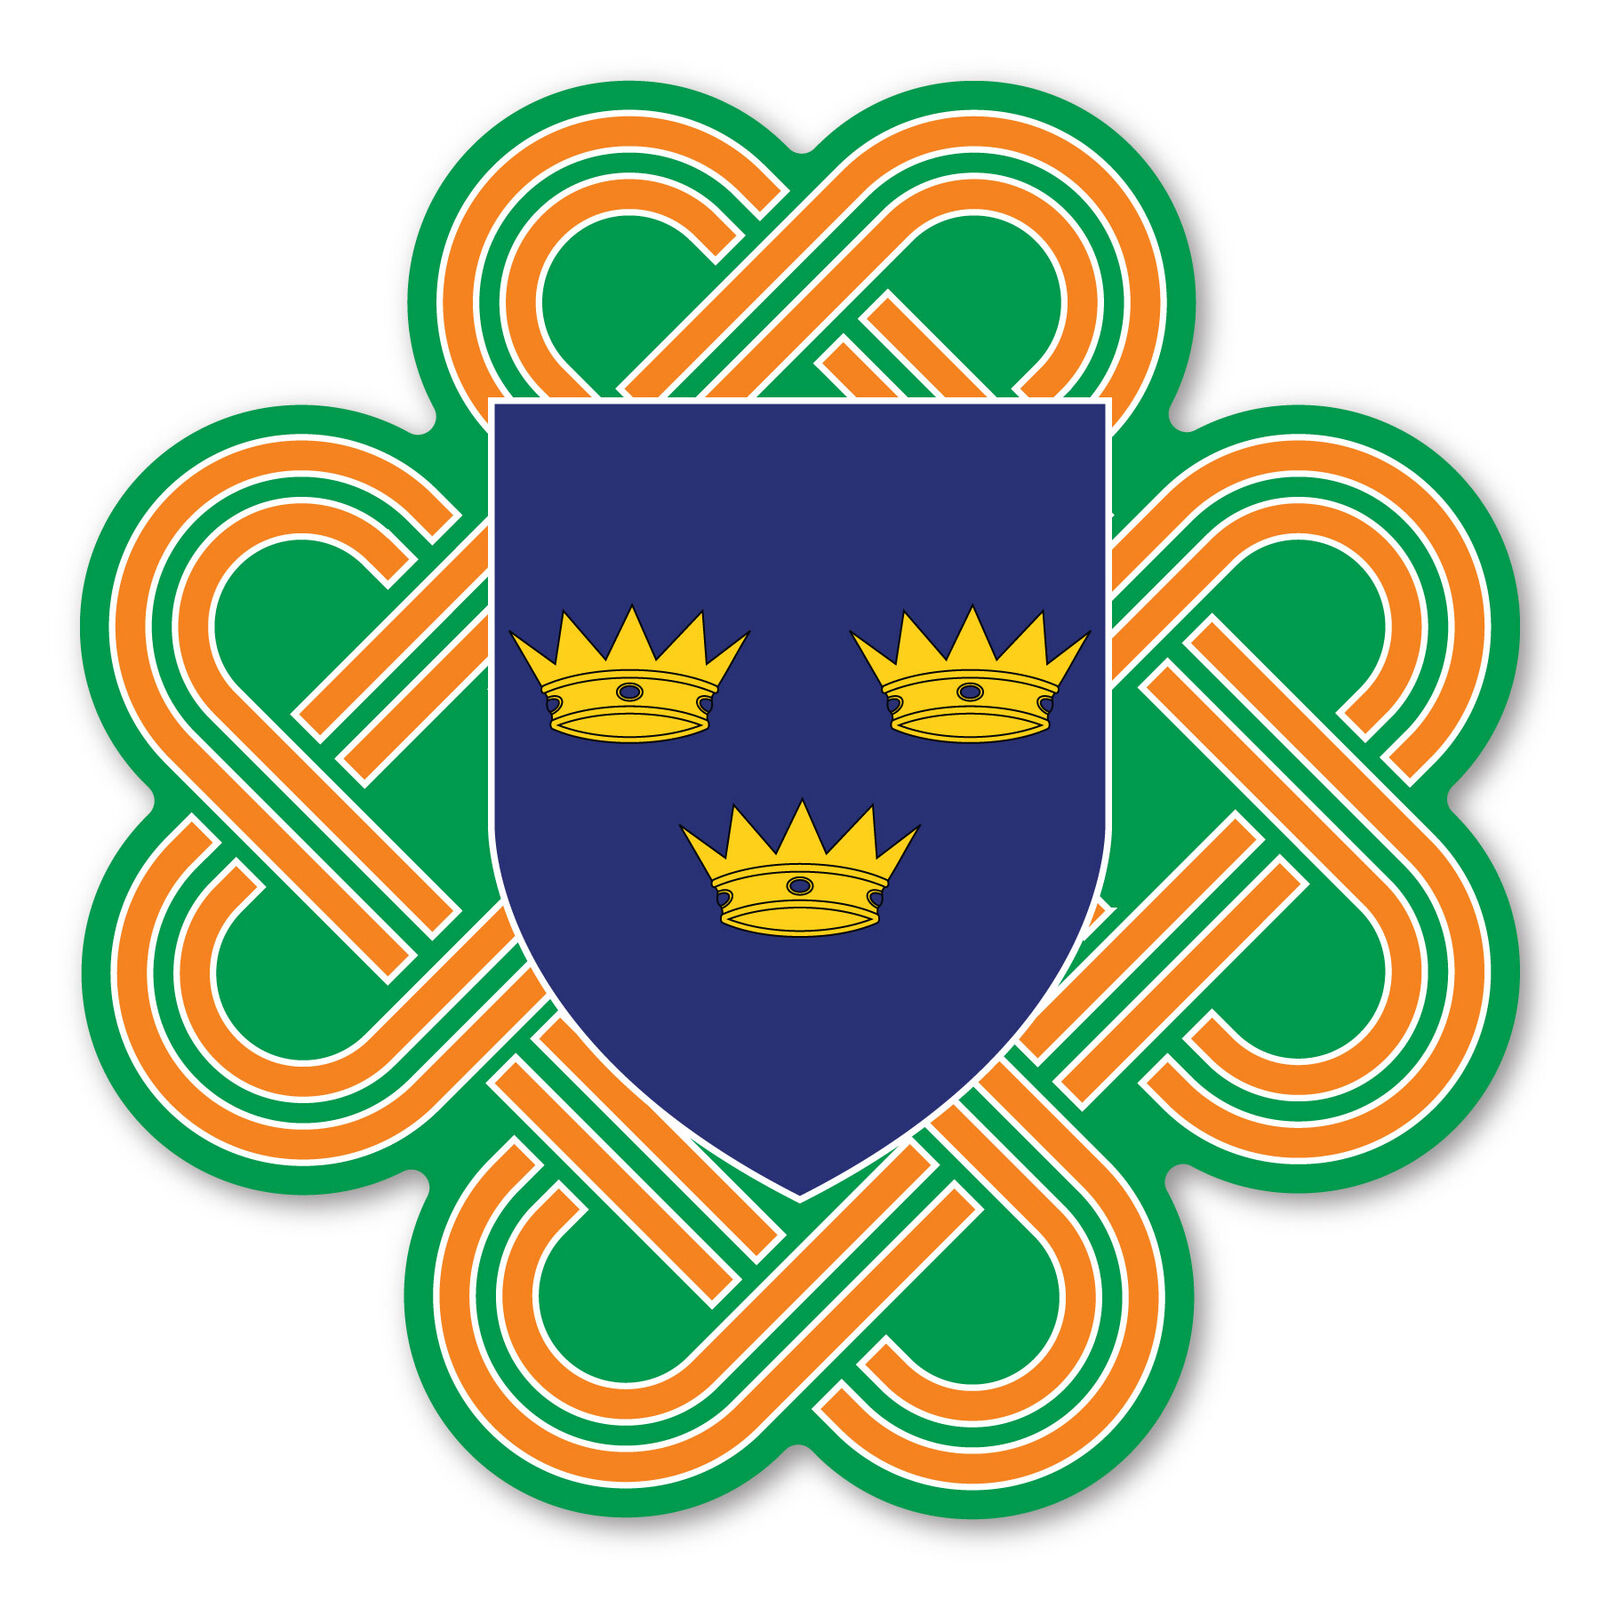 Shamrock/Celtic/St. Patrick’s Day Magnet - Celtic Clover Knot Munster Heraldry